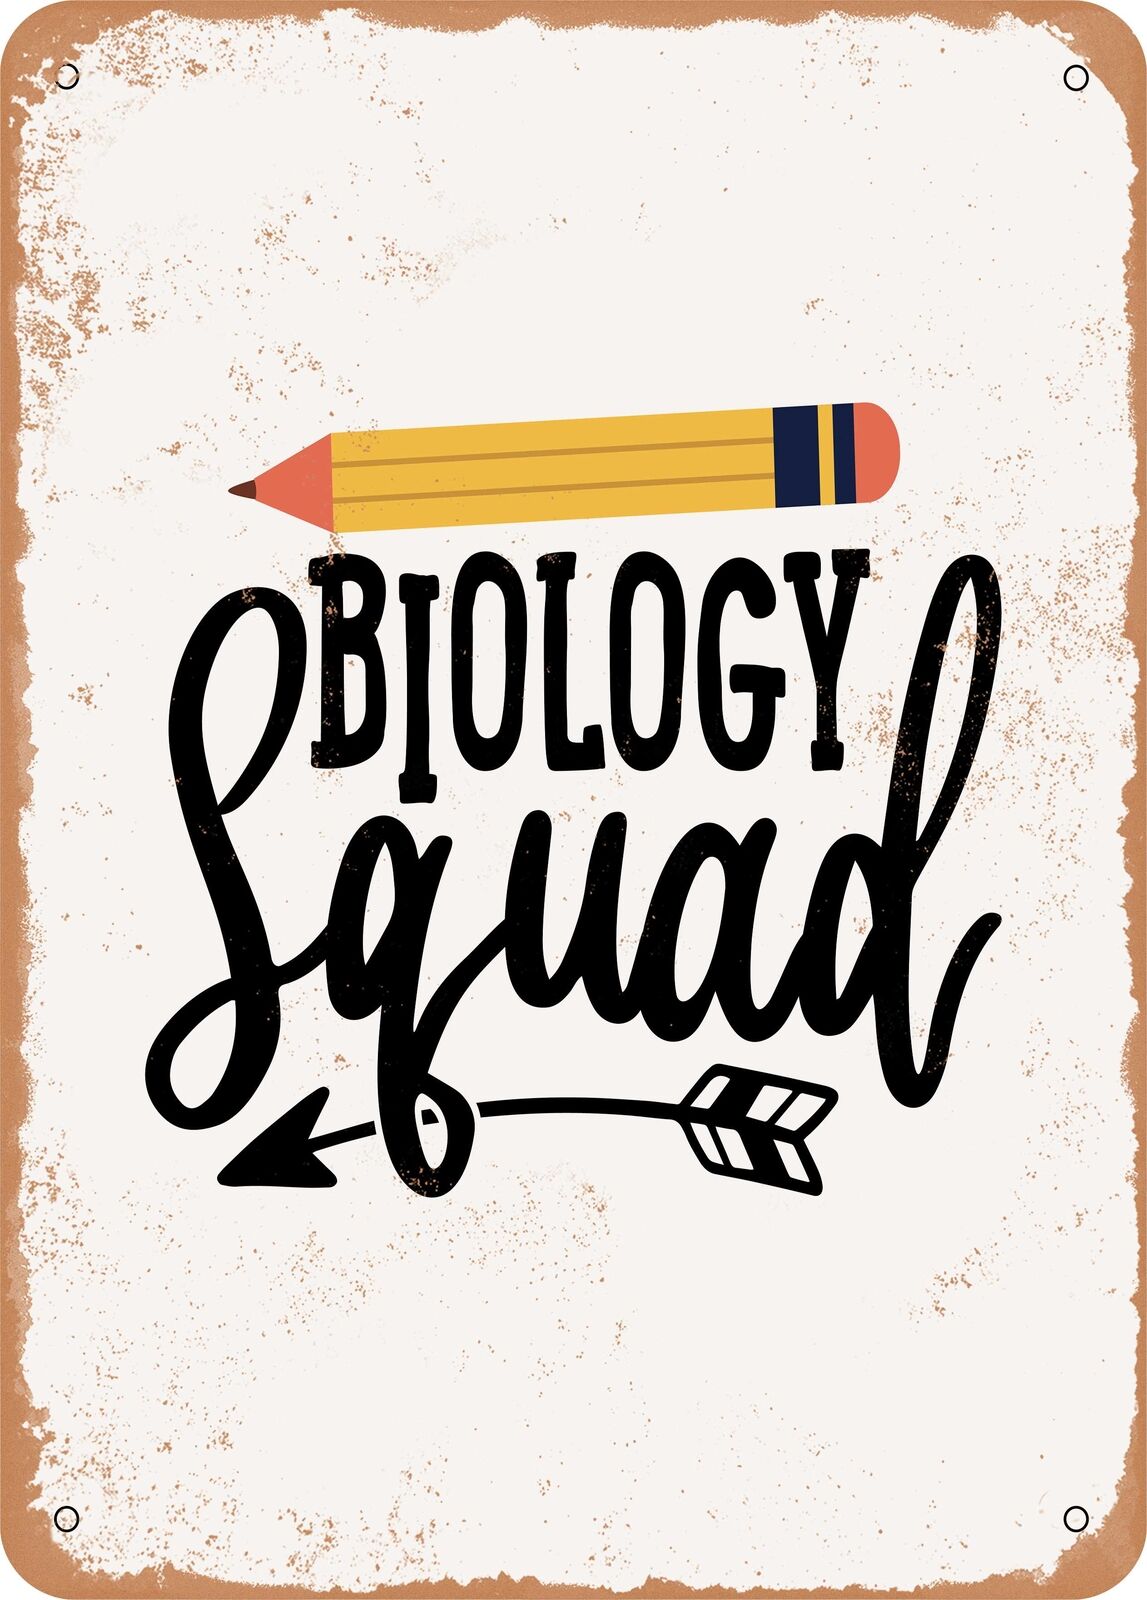 Metal Sign - Biology Squad - Vintage Rusty Look